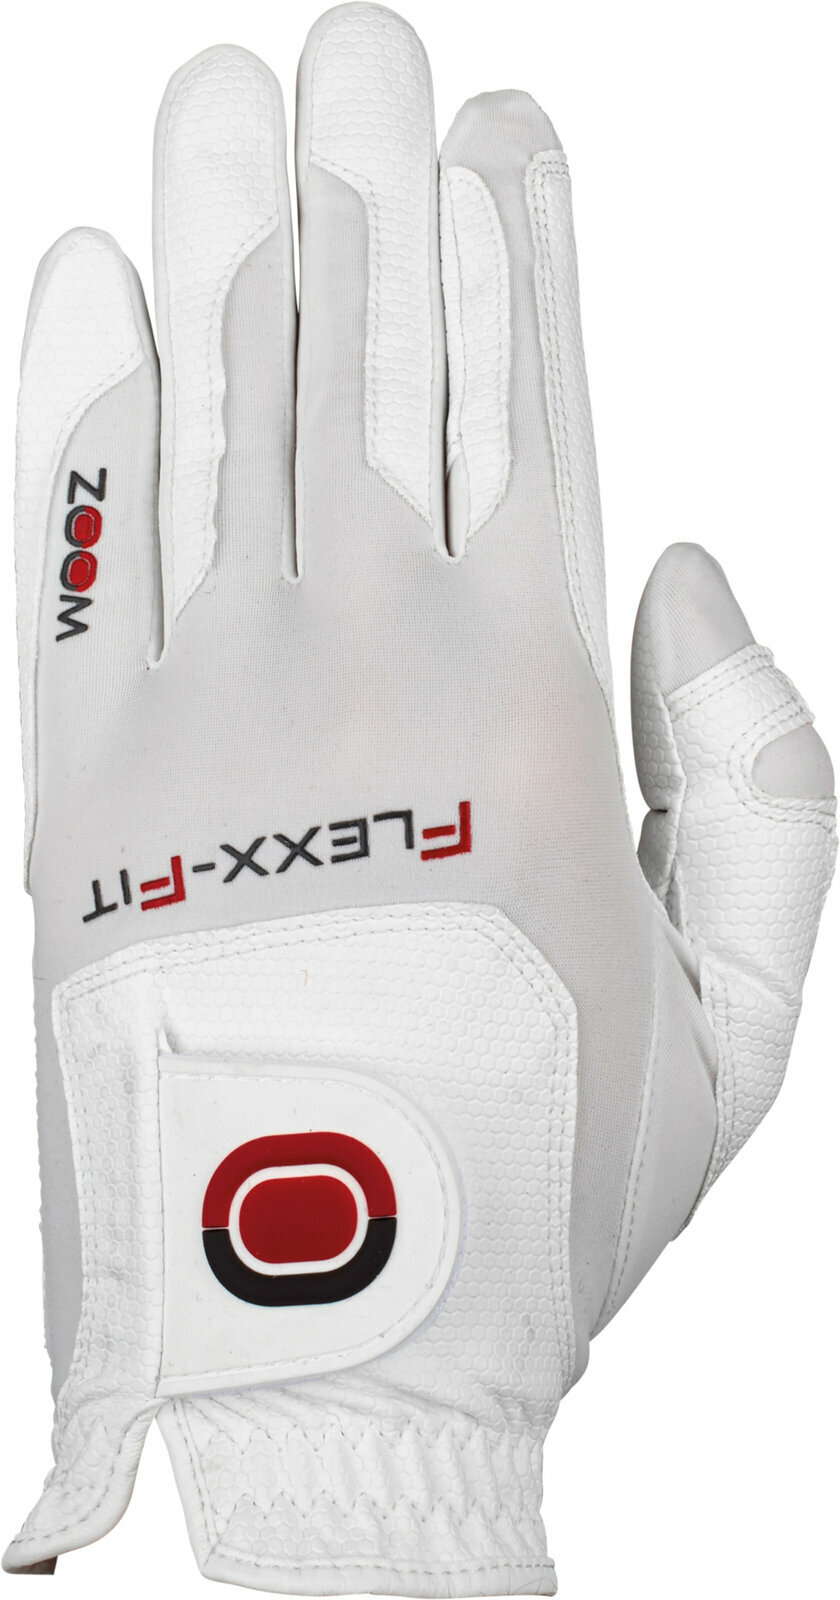 Handskar Zoom Gloves Weather Style Mens Golf Glove Handskar